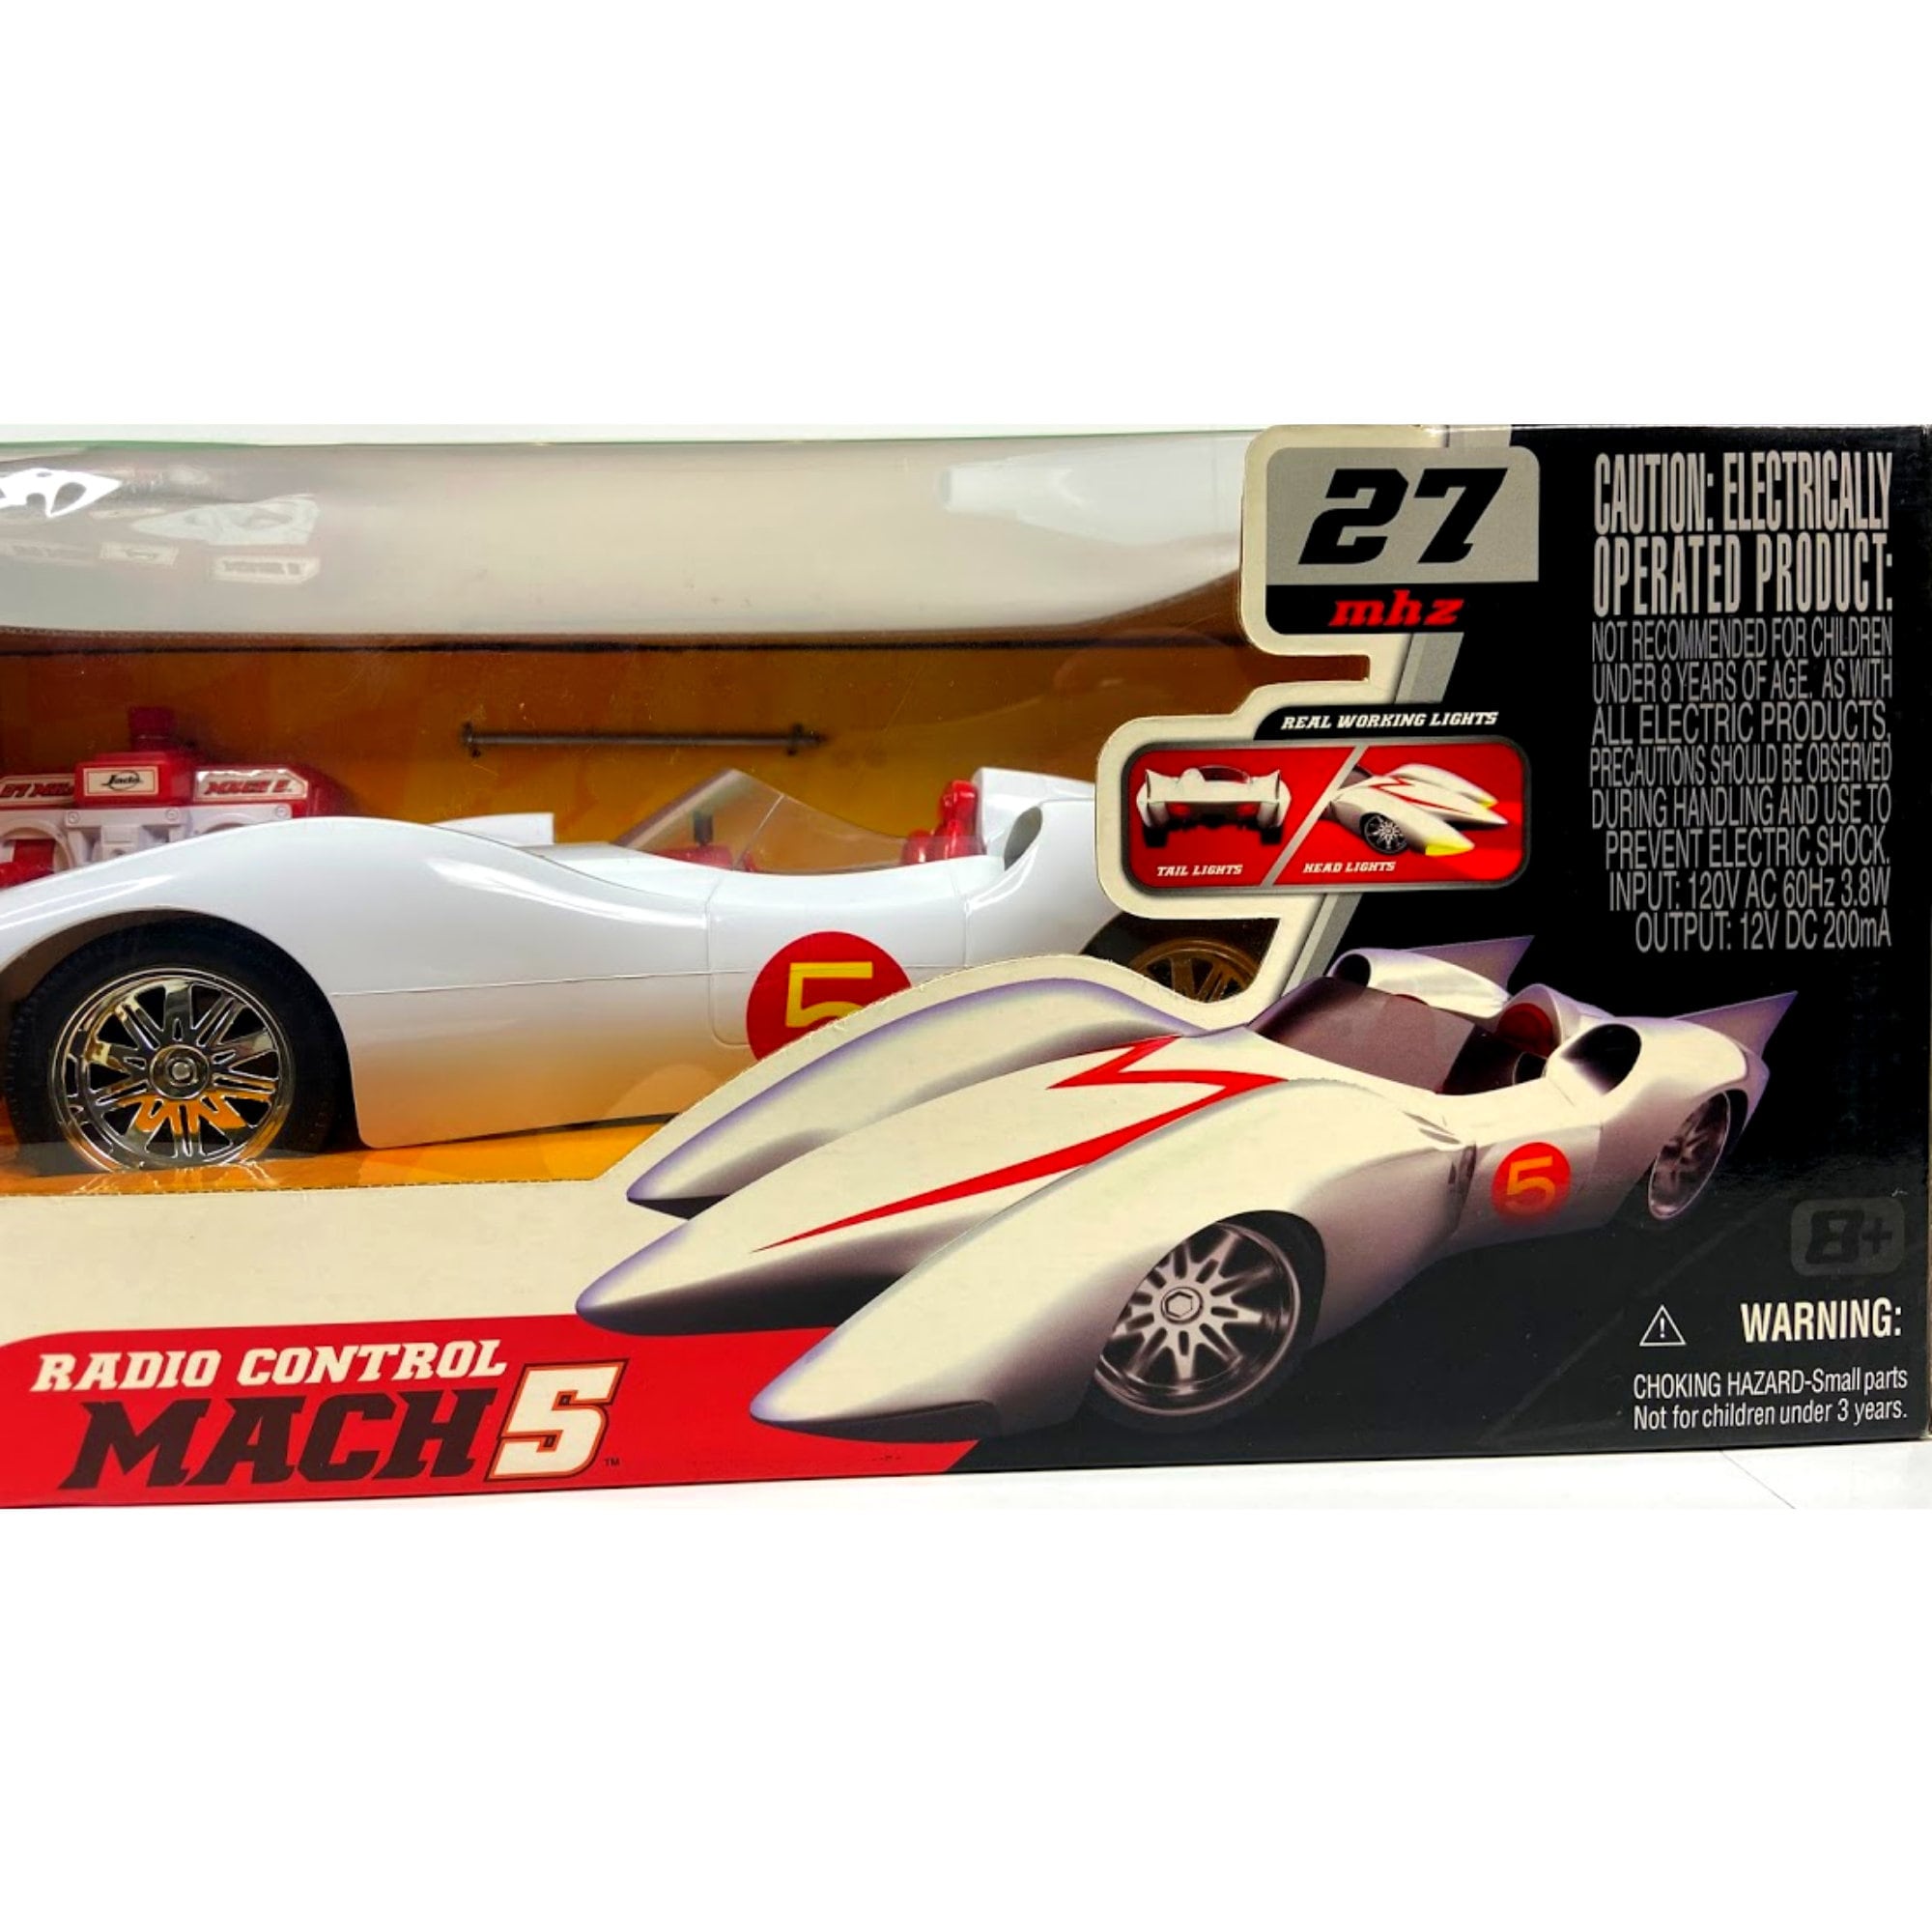 SPEED RACER MACH 5: V3